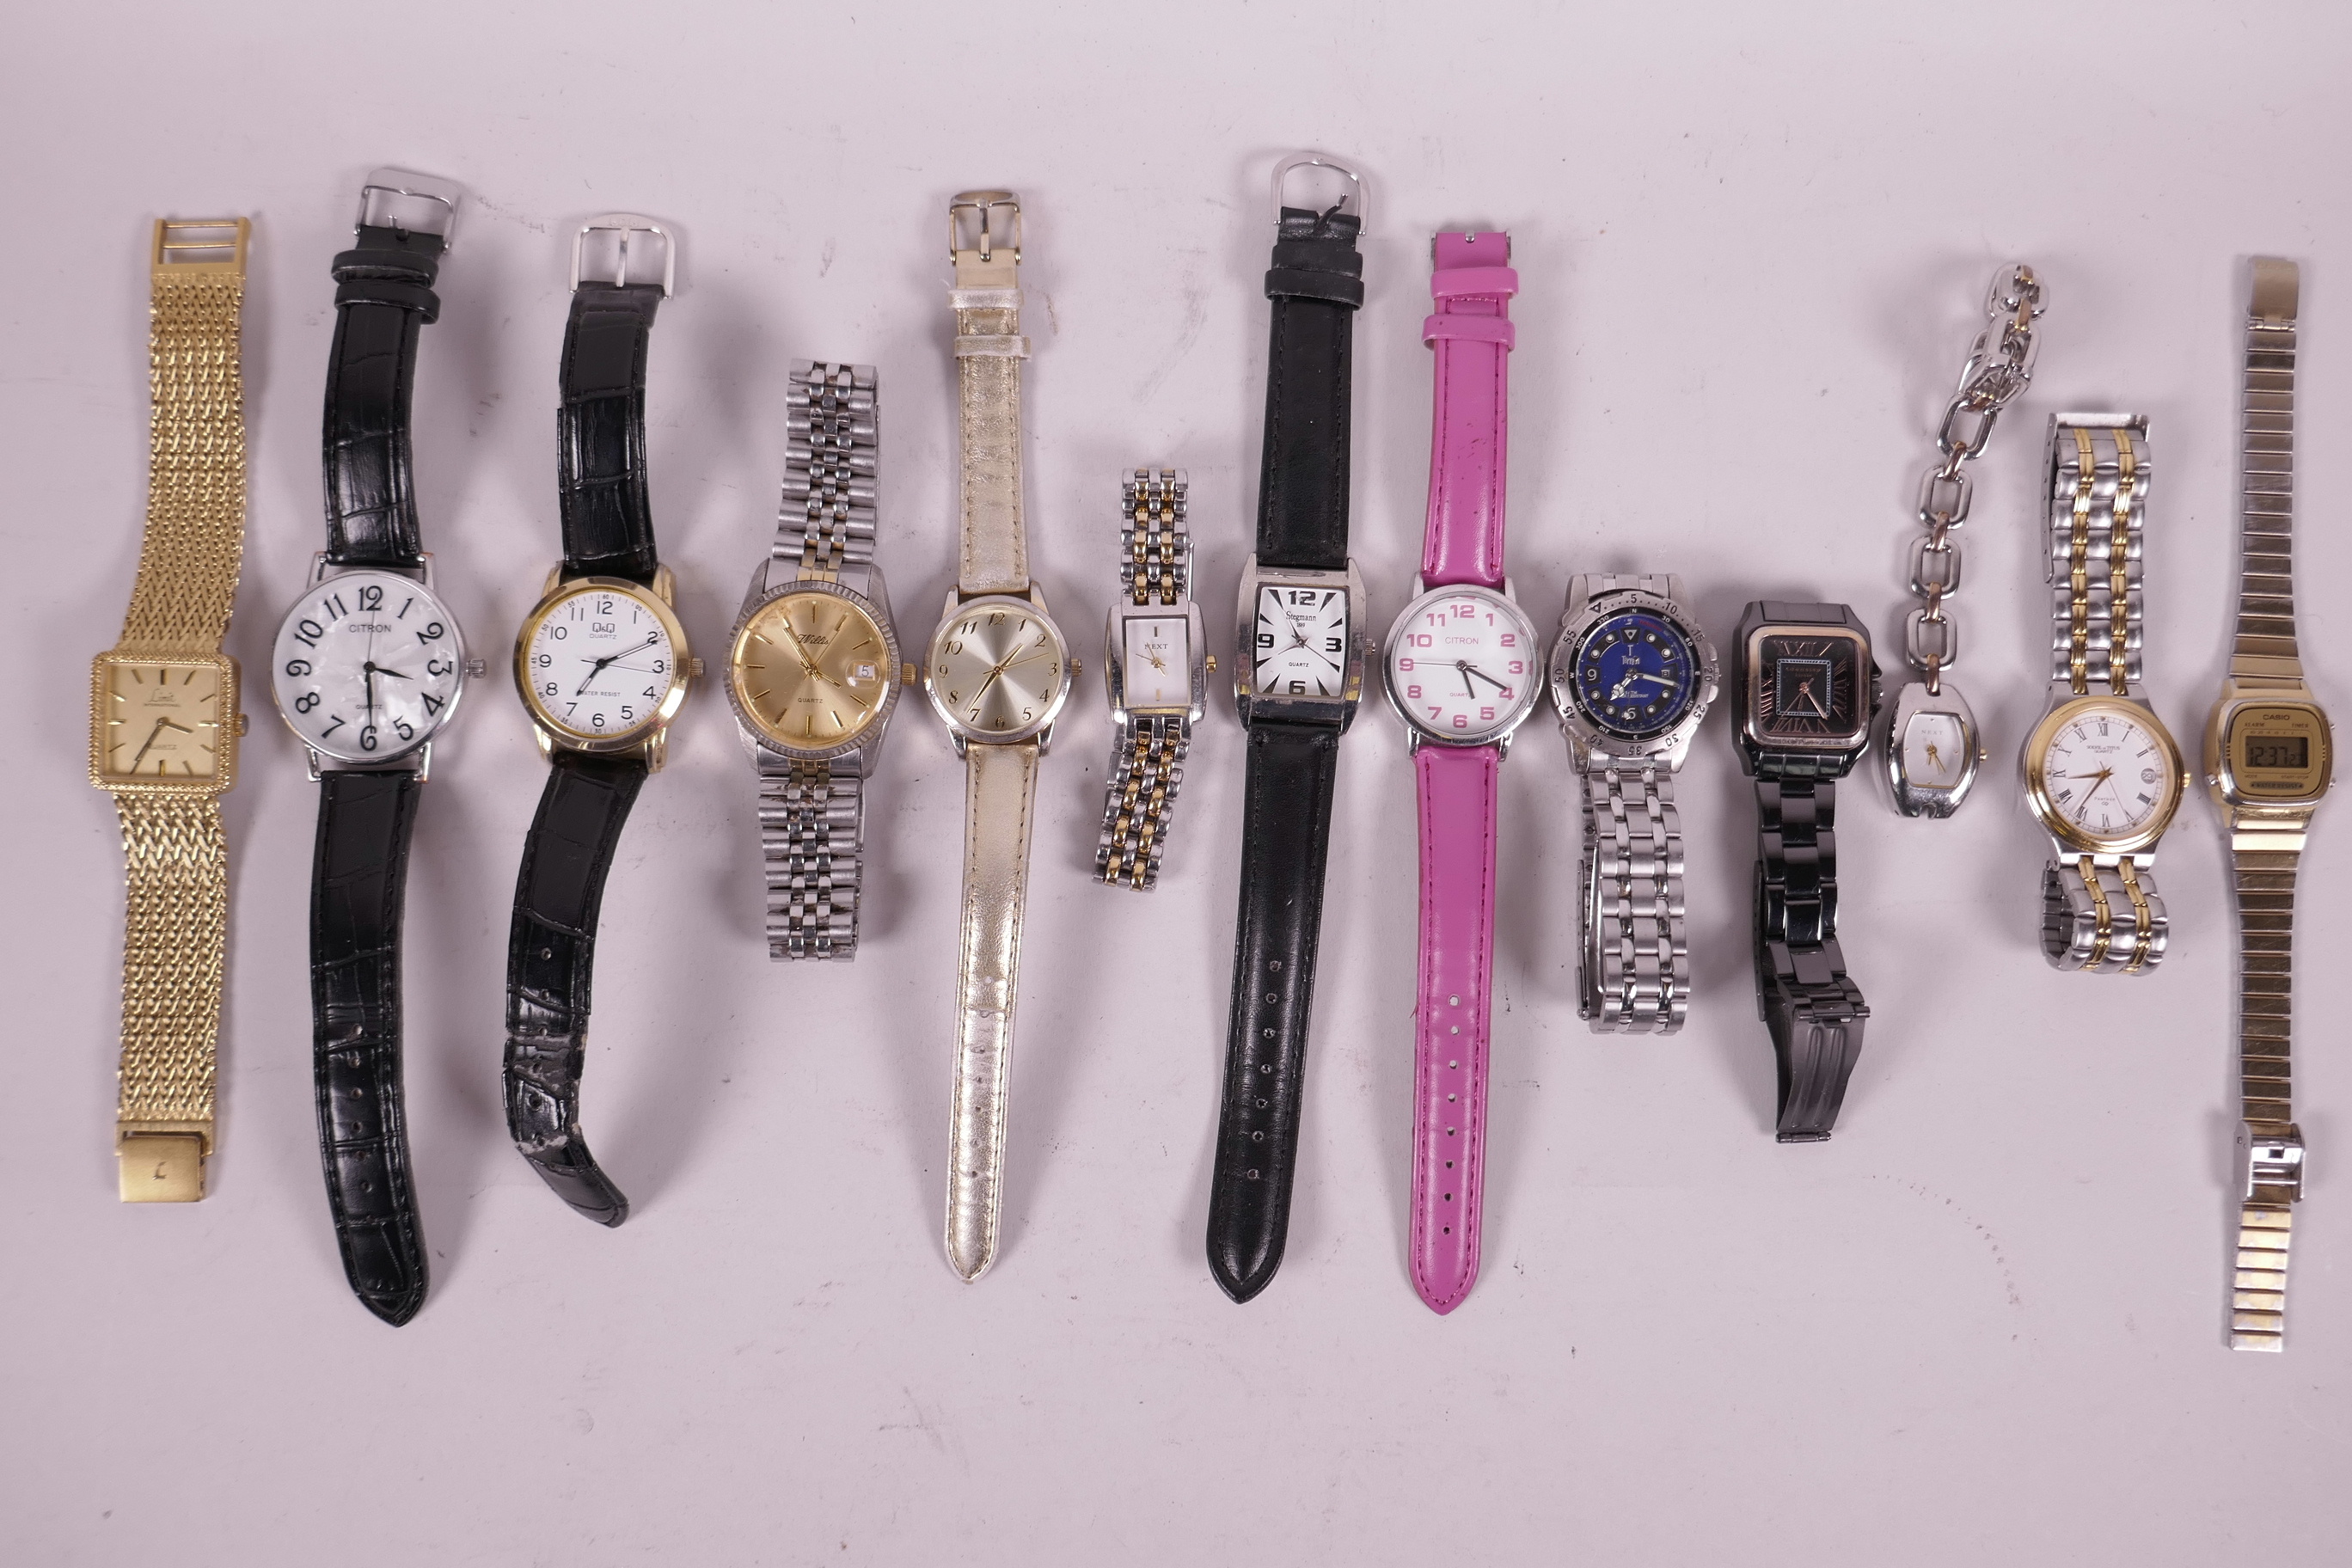 A quantity of ladies' and gentlemen's wristwatches including Casio, Limit, Citron, Terrain, Stegmann